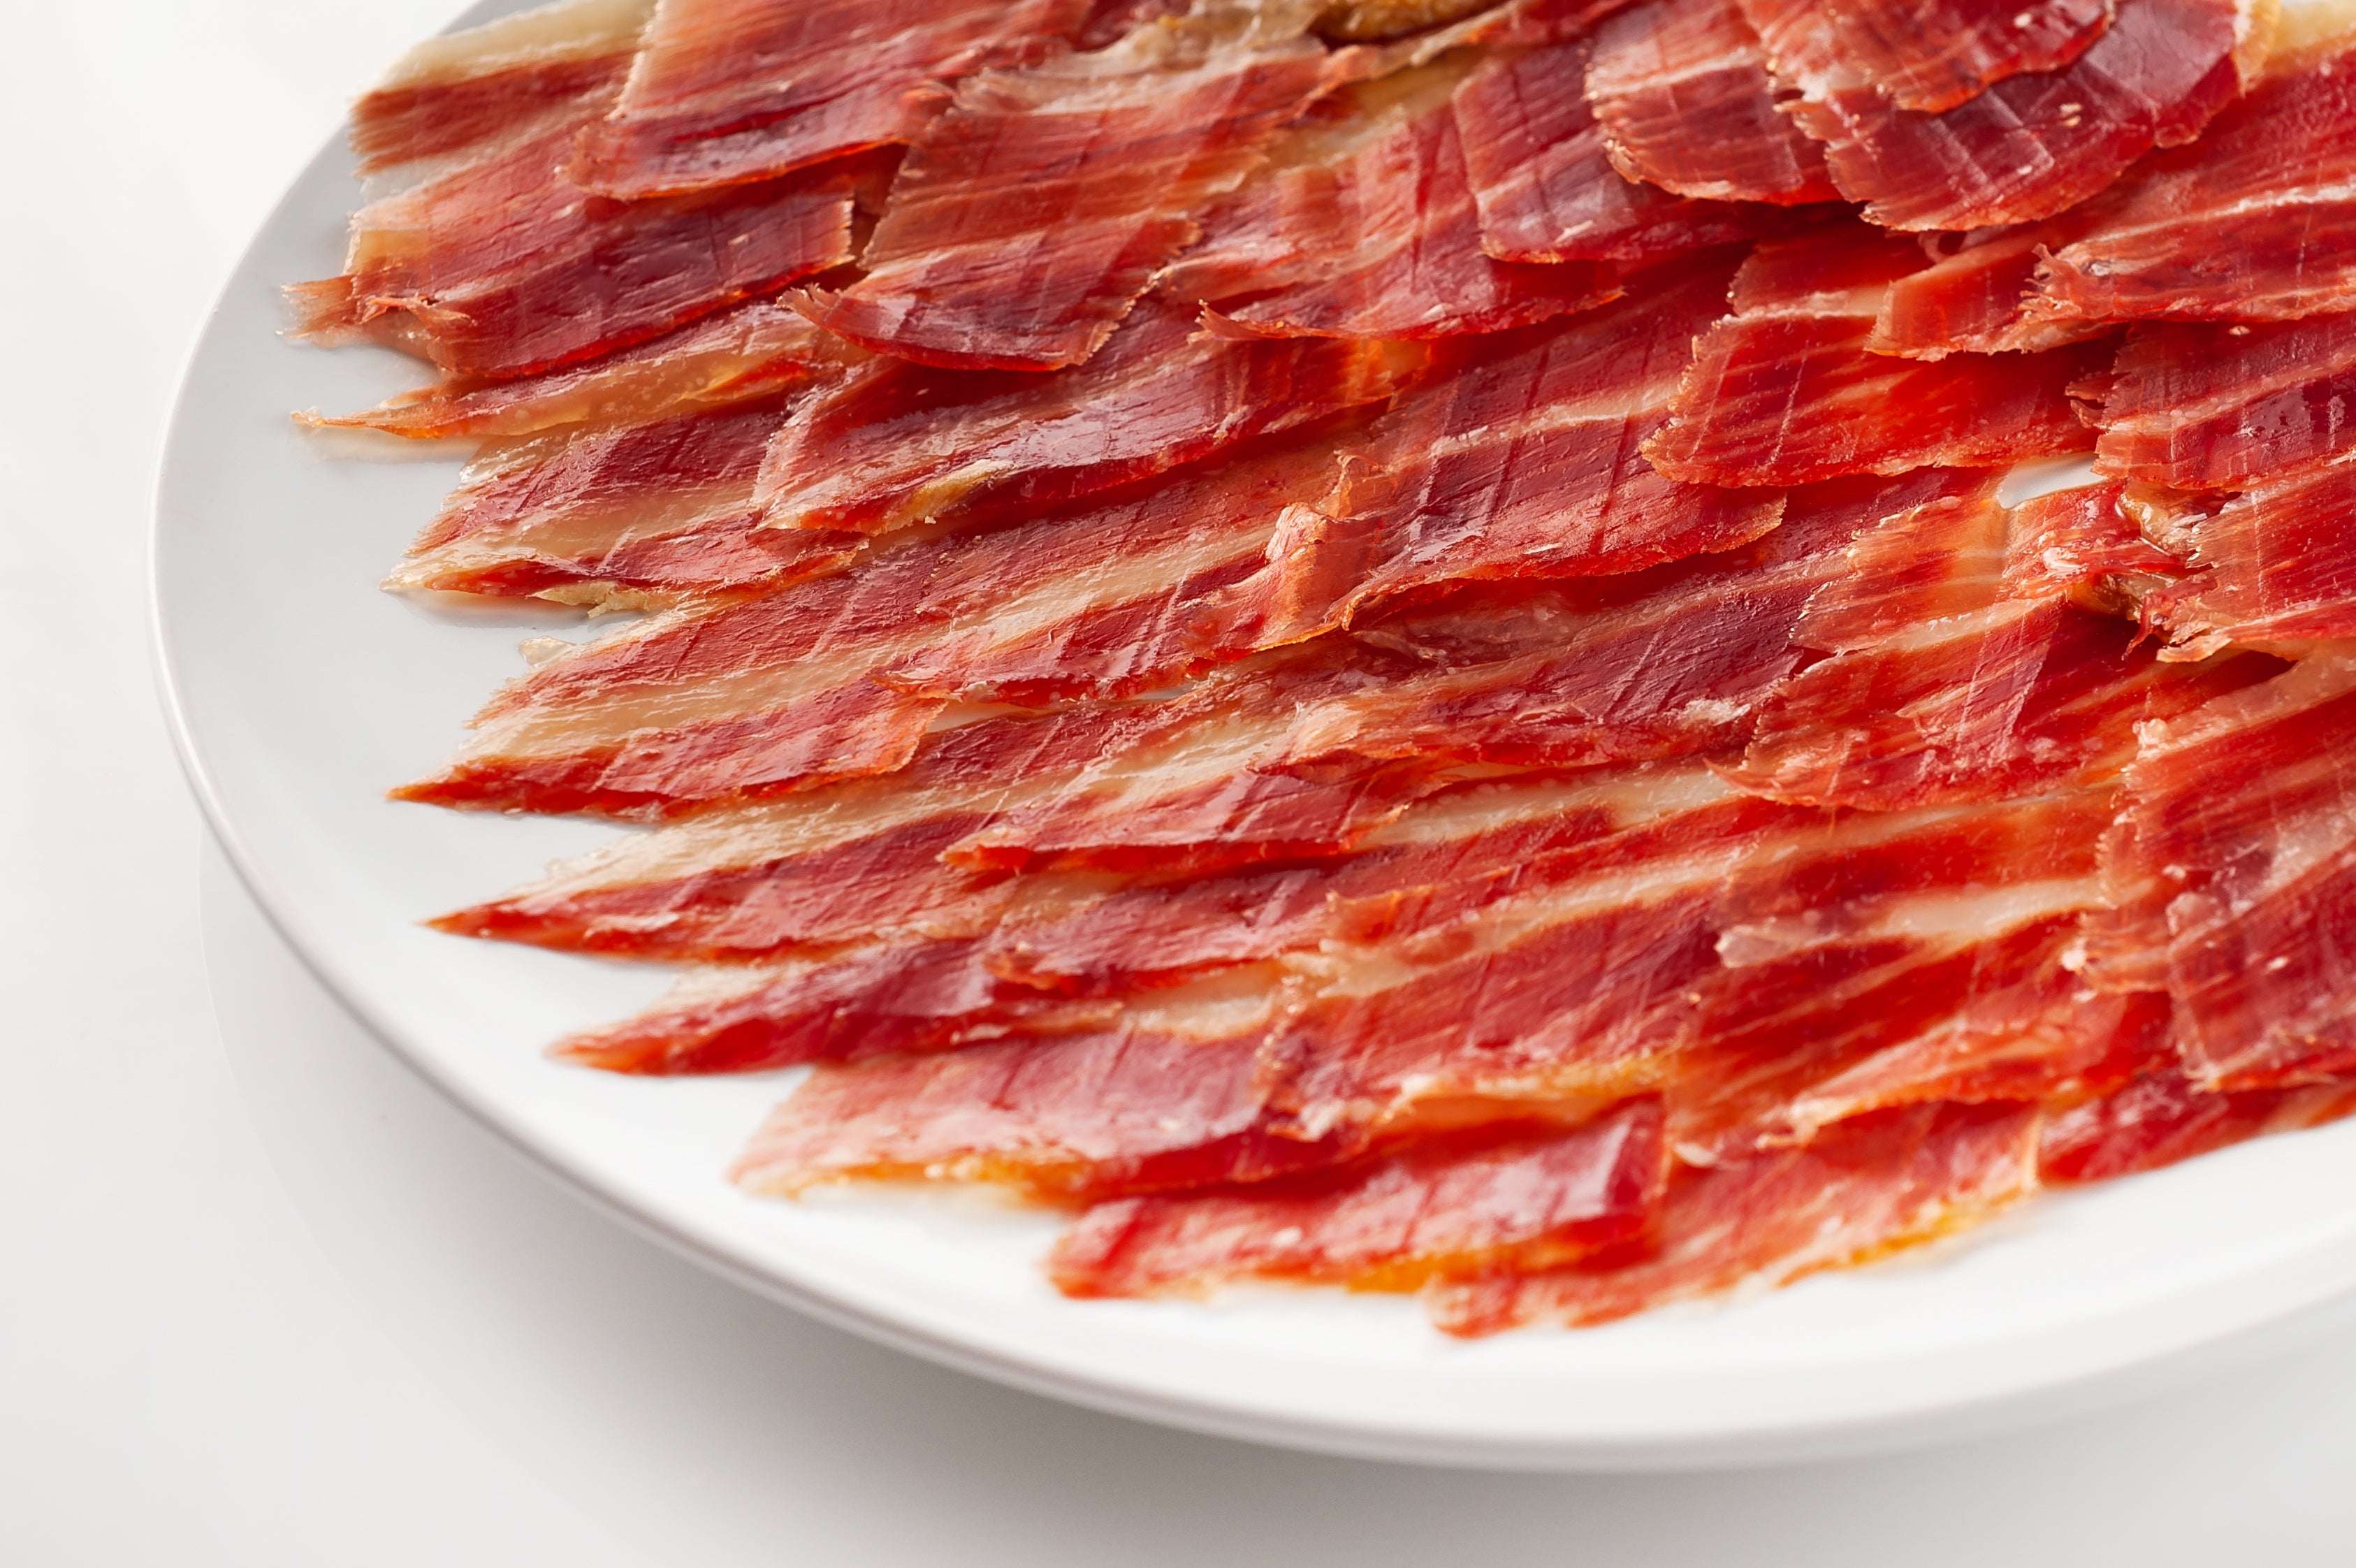 50% Iberico Grain-fed Boneless Ham by Fermin - Dao Gourmet Foods